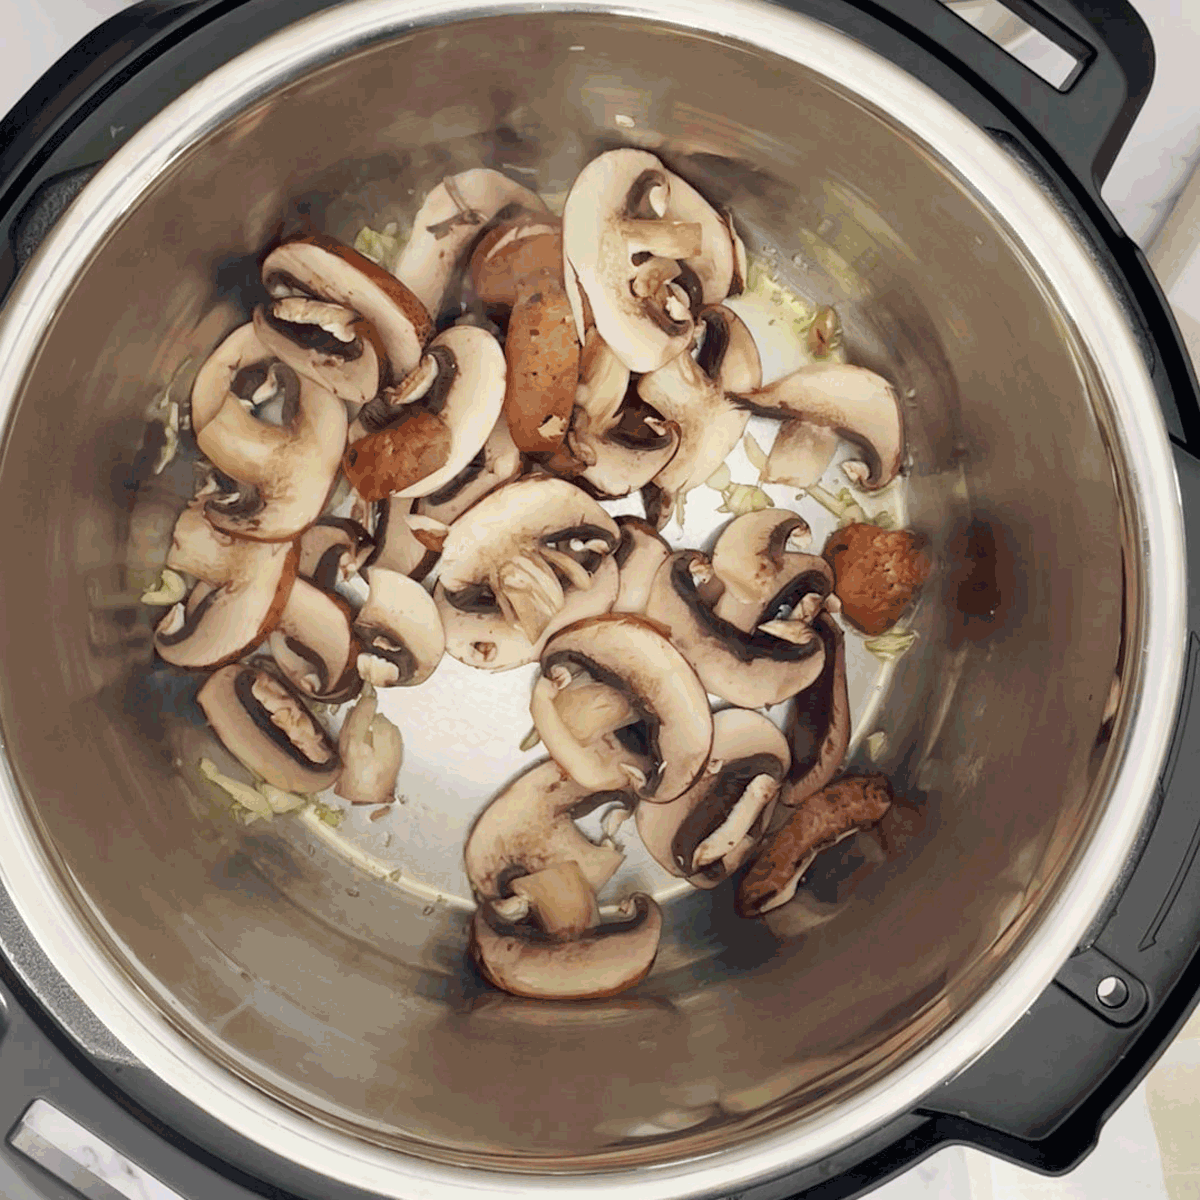 Saute chopped mushroom.